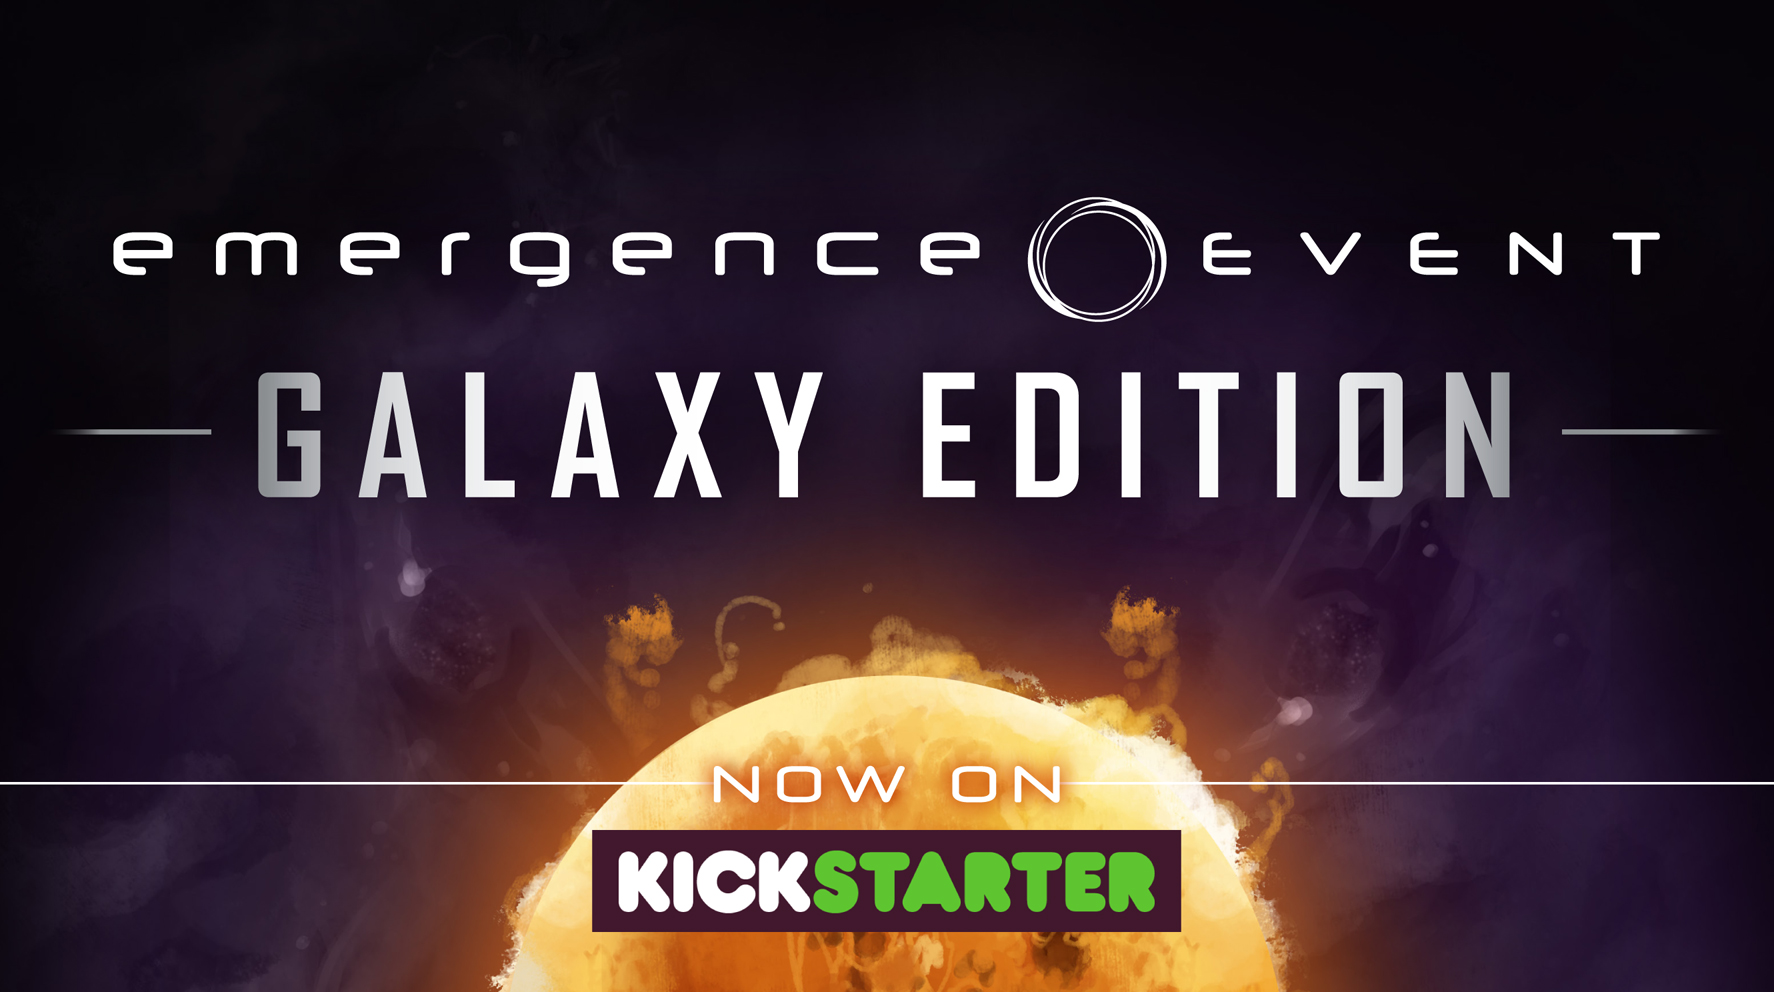 Emergence Event Galaxy Edition Kickstarter is Live!